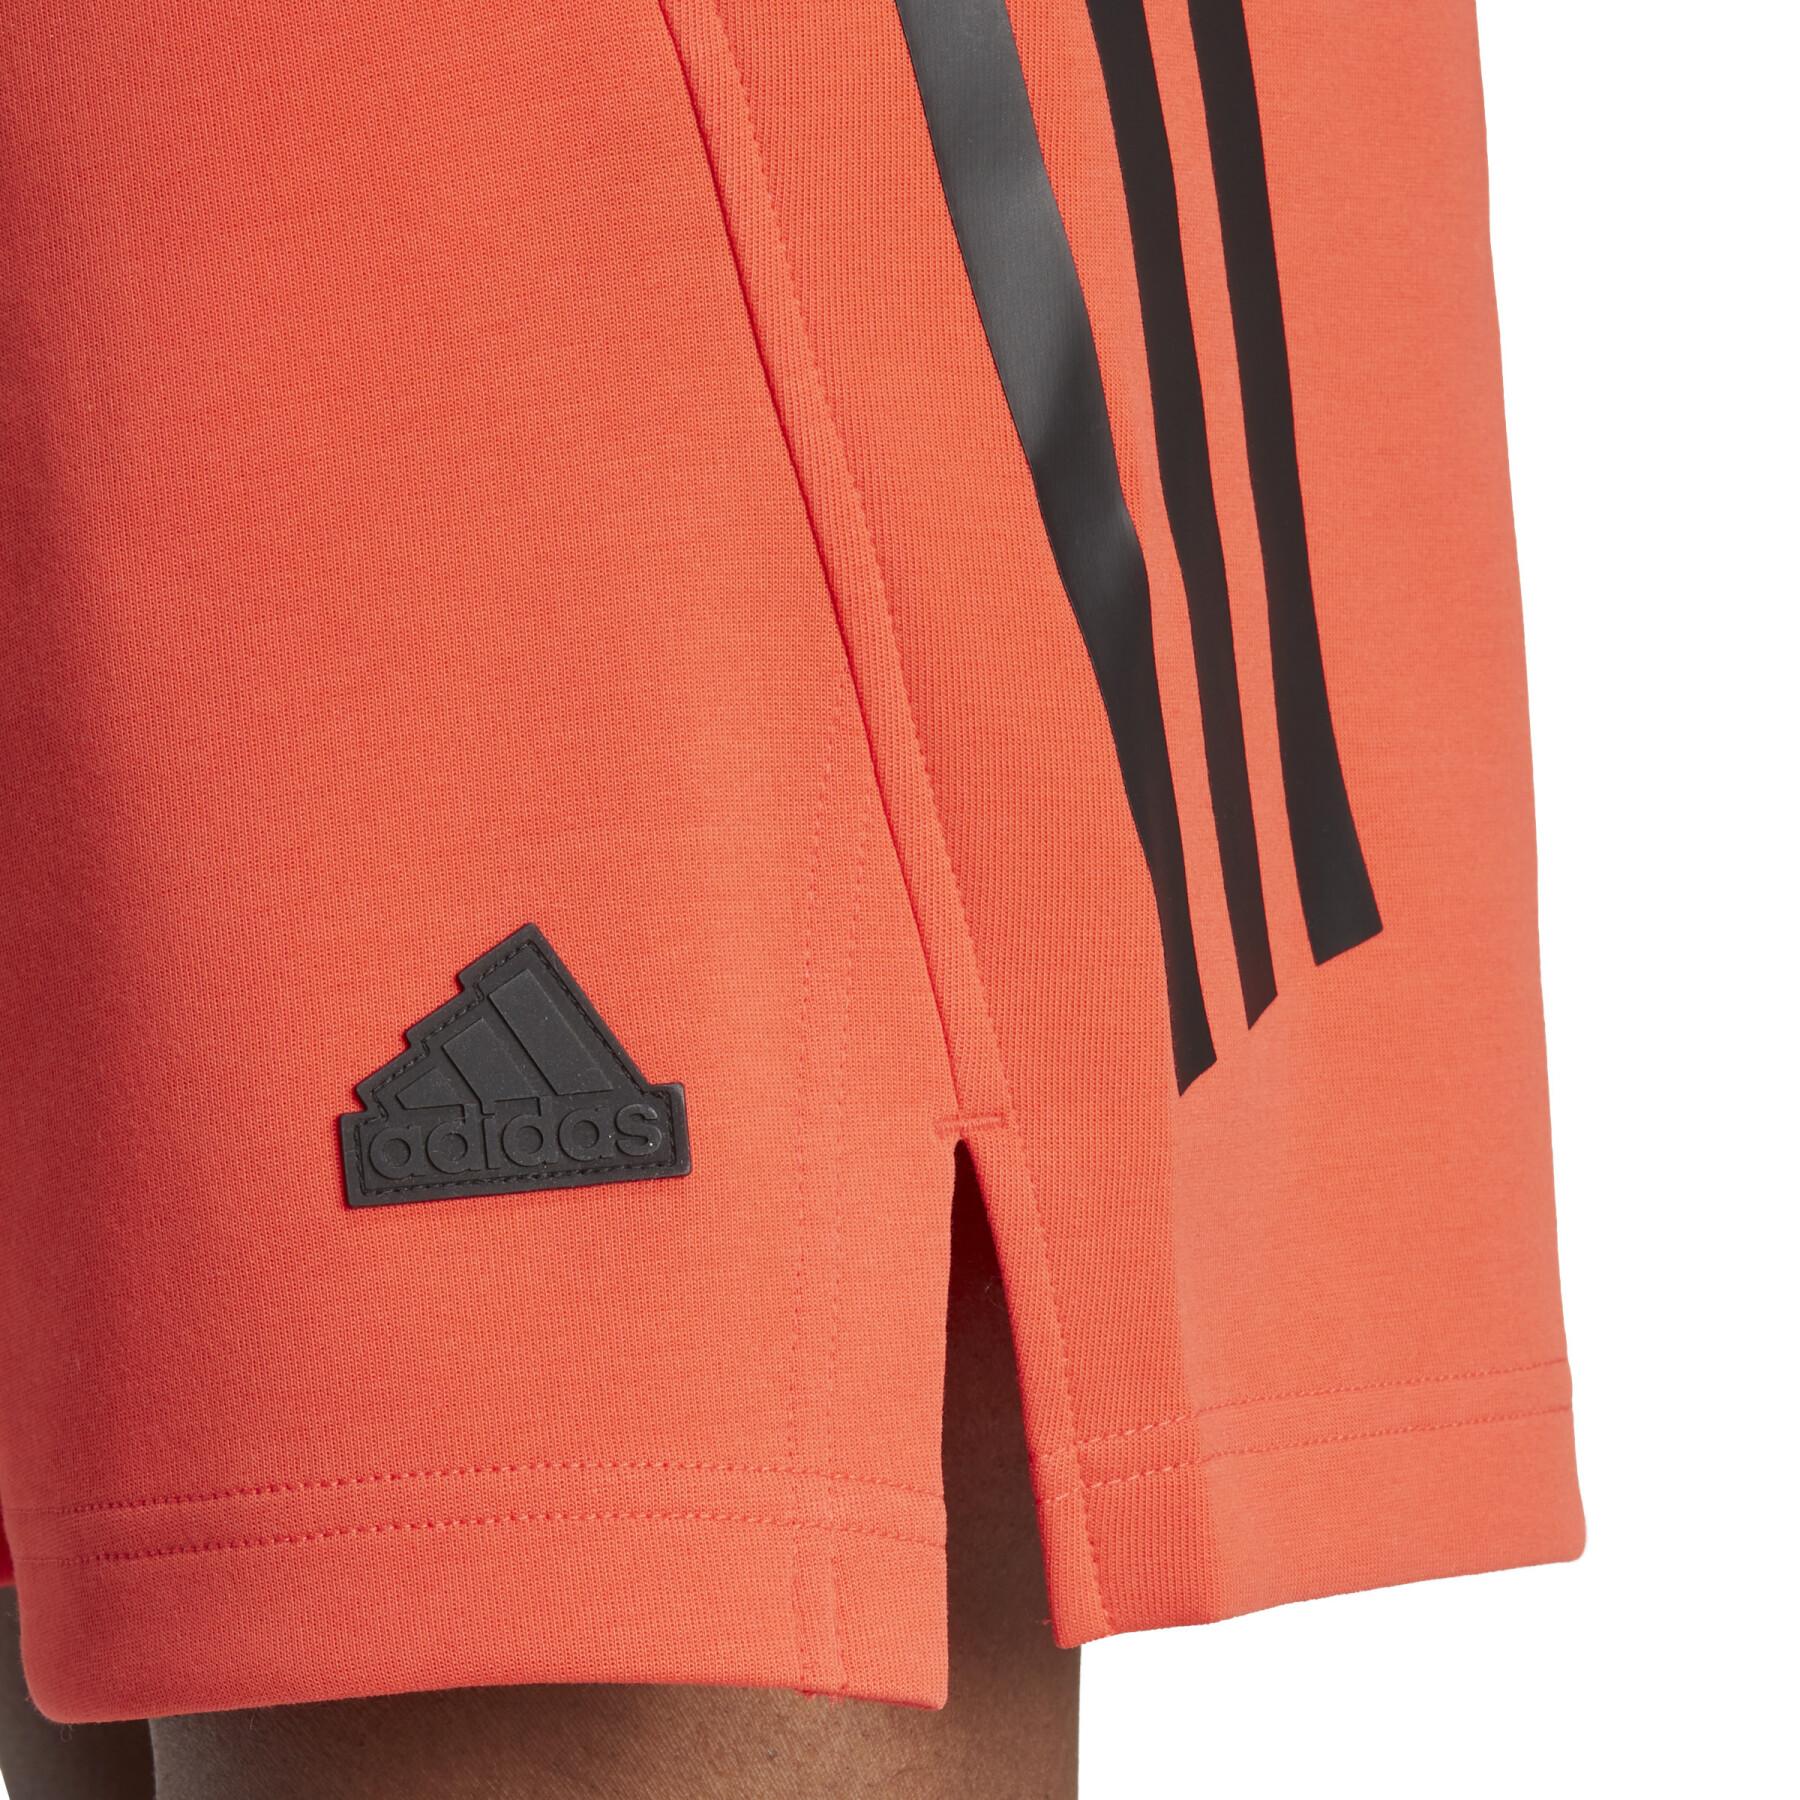 3-stripe shorts adidas Future Icons